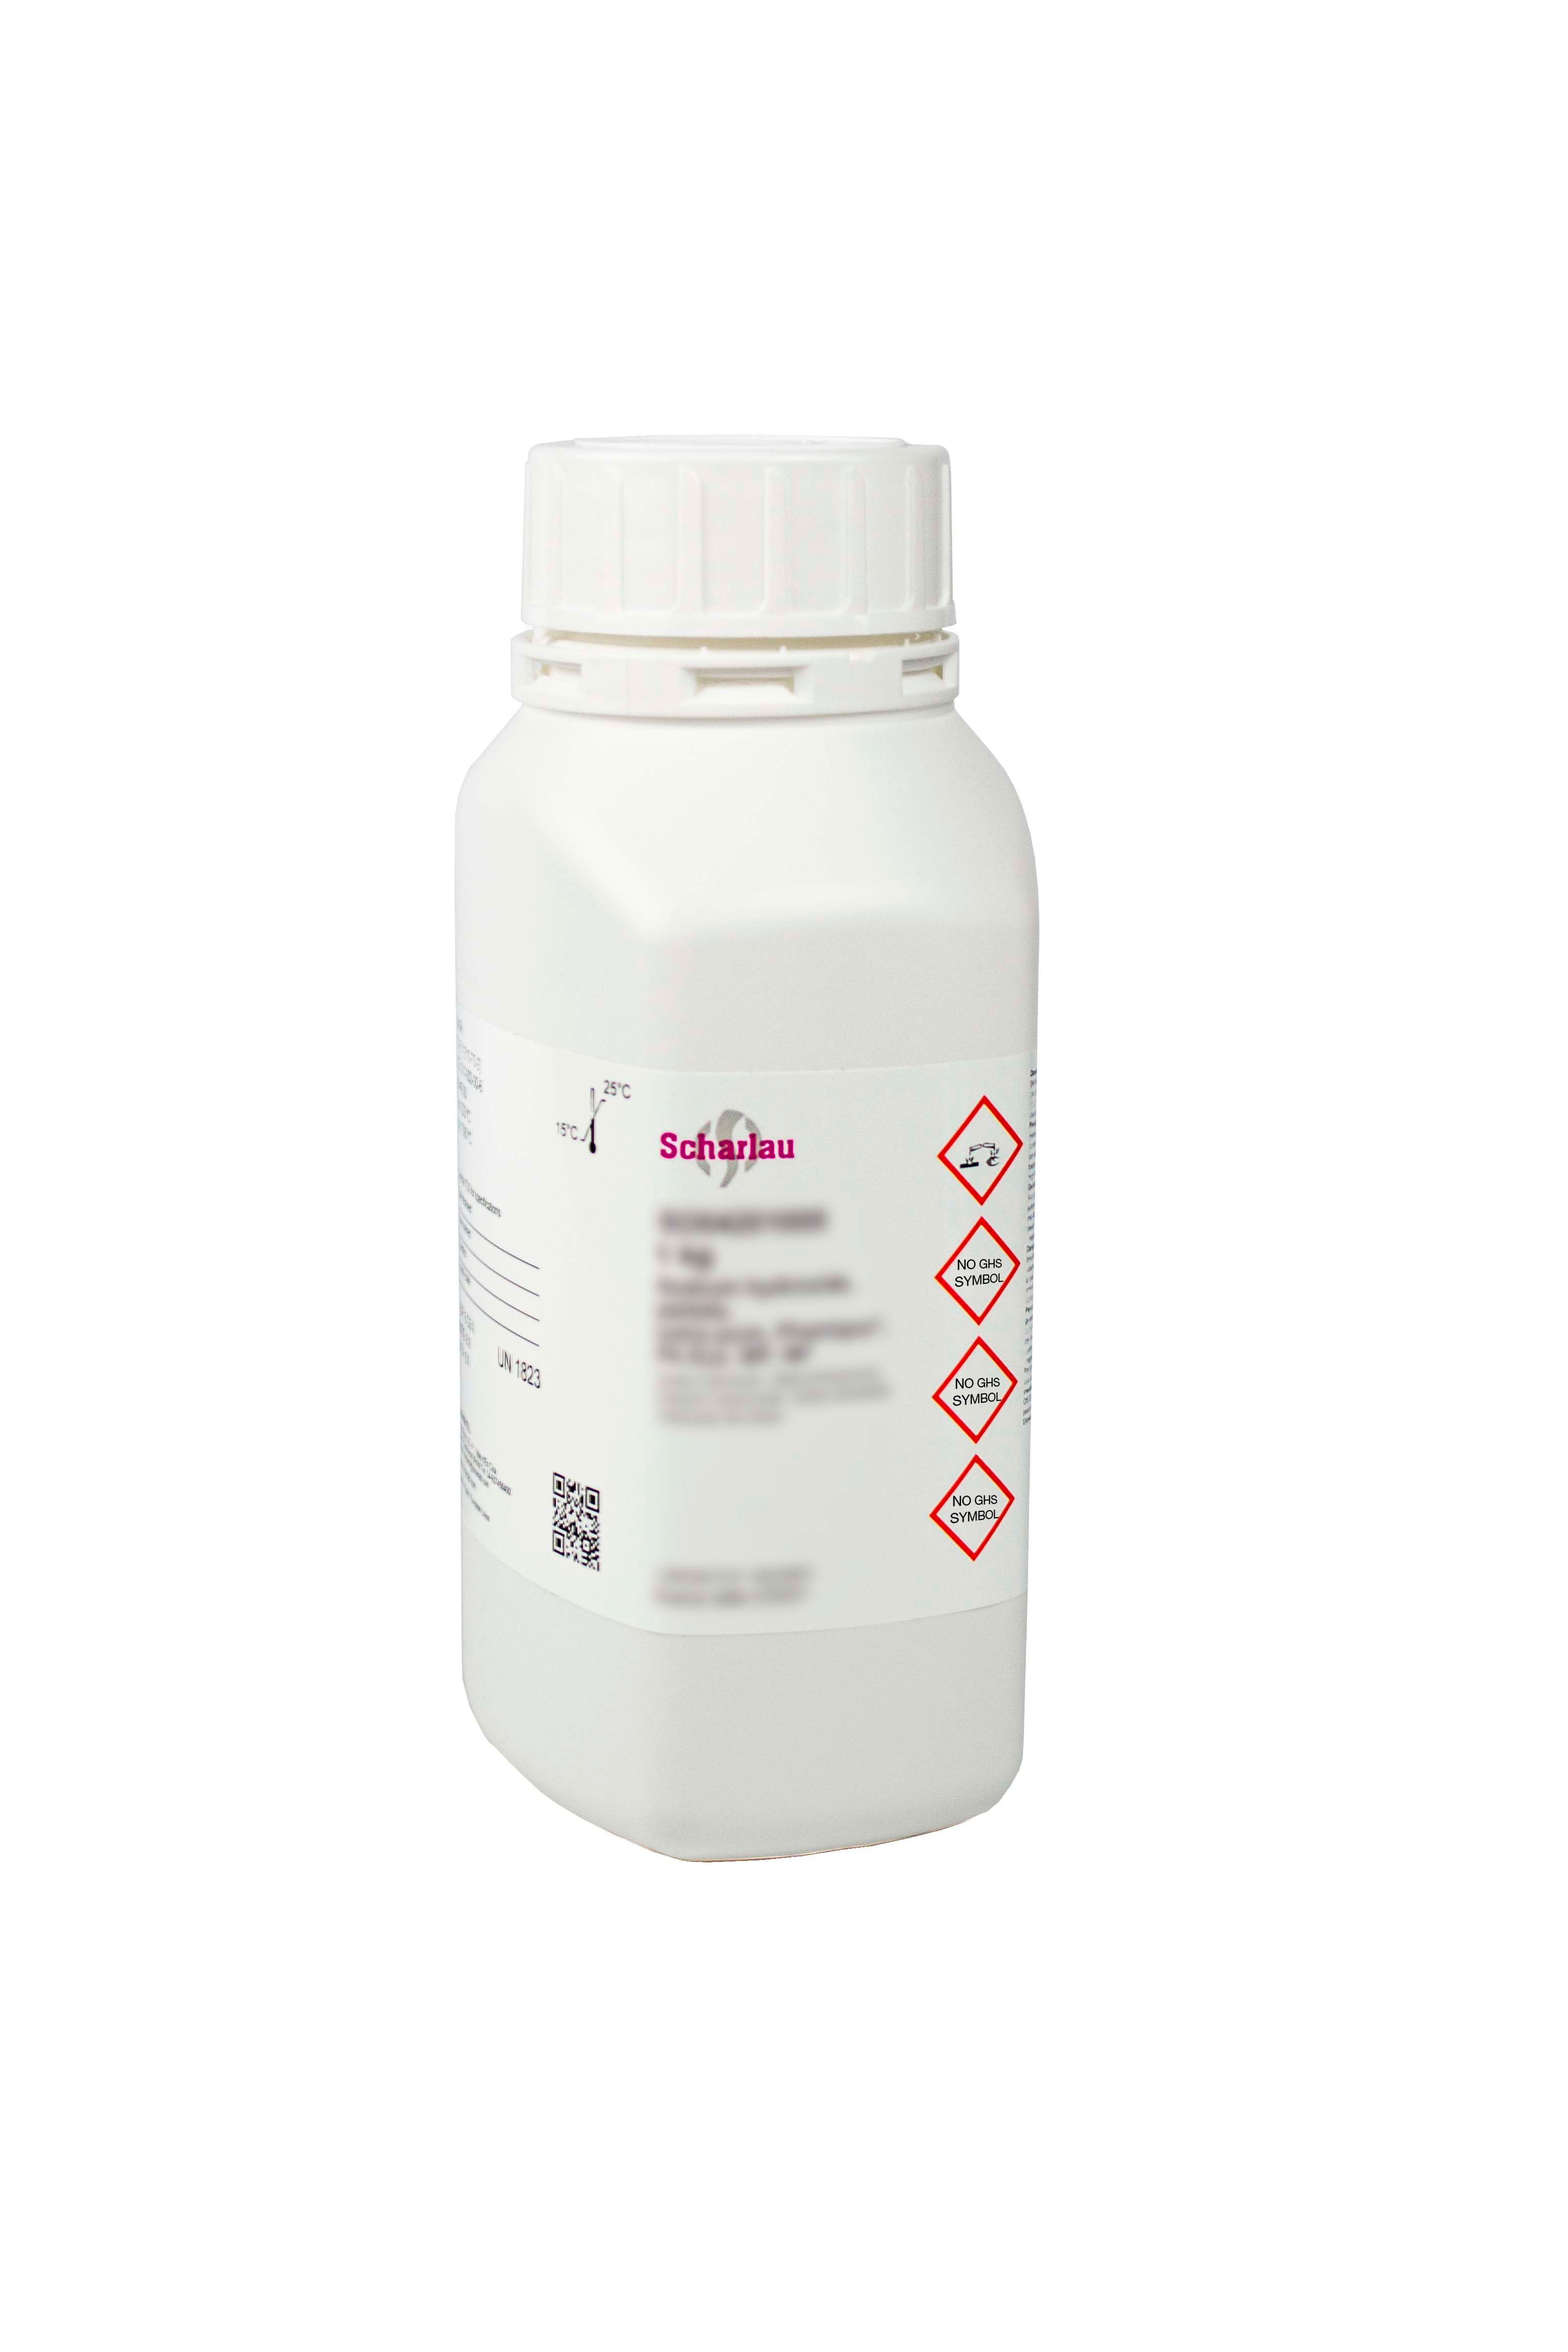 Potasio sodio tartrato tetrahidrato, Pharmpur®, Ph Eur, BP, USP